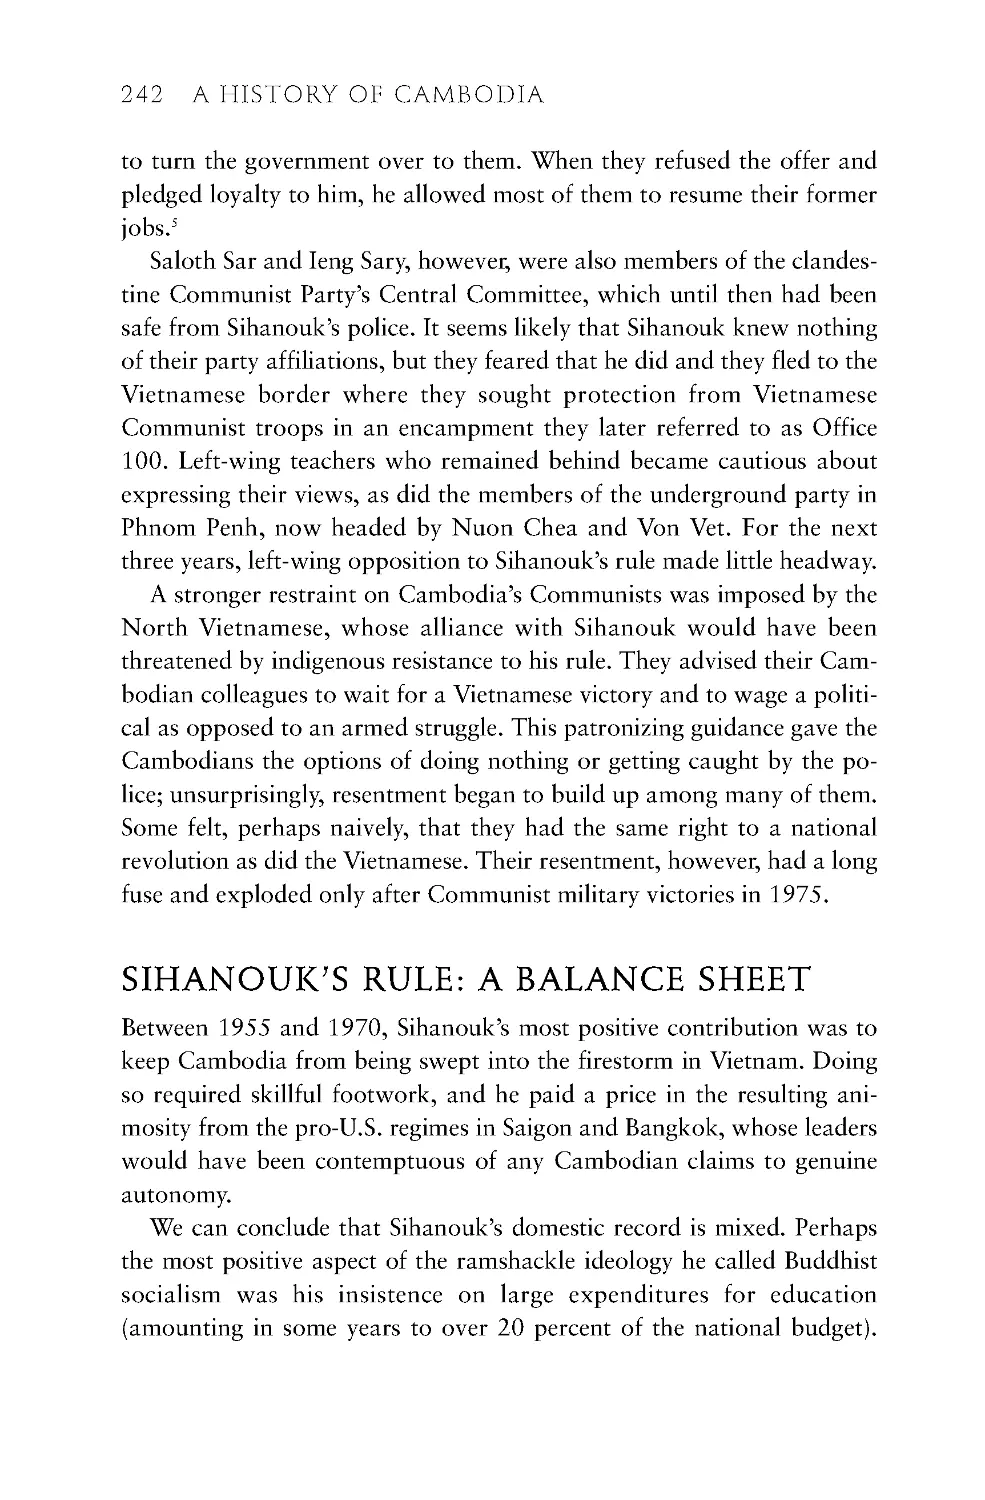 Sihanouk's Rule: A Balance Sheet